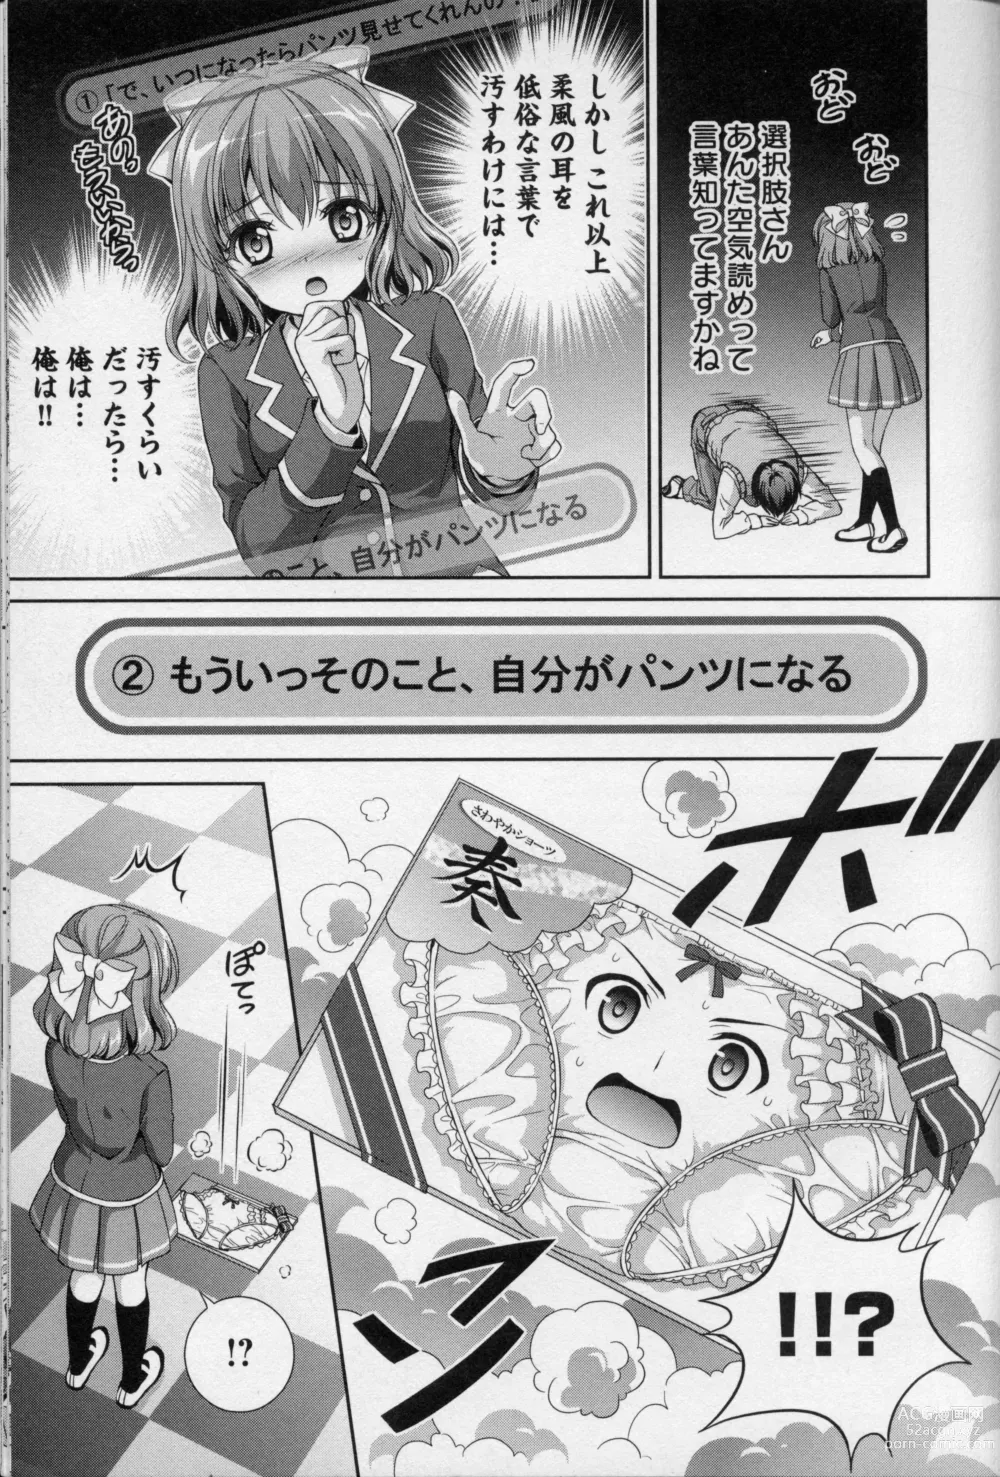 Page 20 of manga 「どっちを選ぶ?」ダブル描き下ろしコミックス Blu-ray＆DVD 第2巻 同梱特典